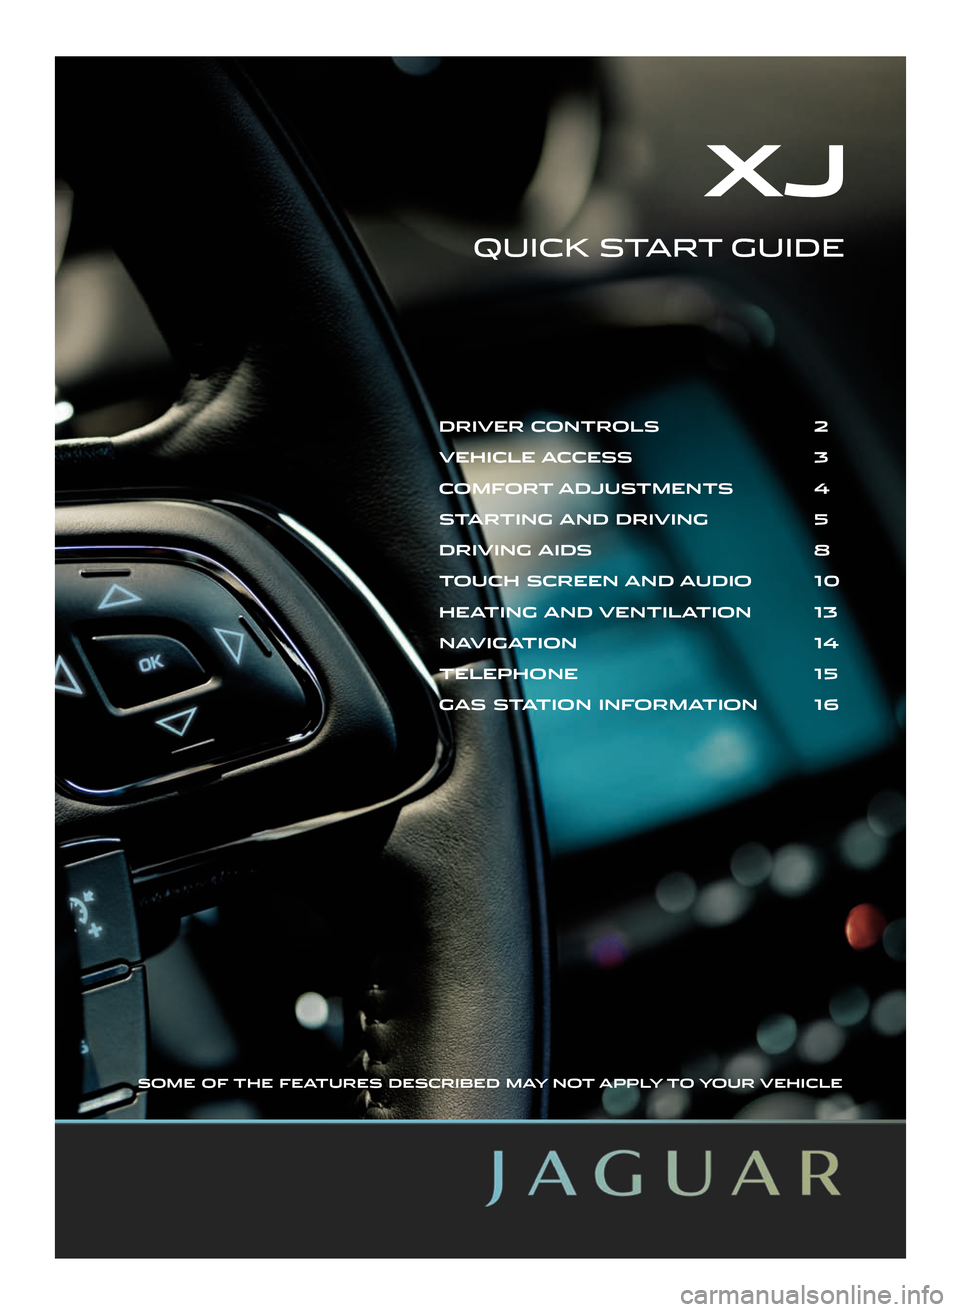 JAGUAR XJ 2013 X351 / 4.G Quick Start Guide 